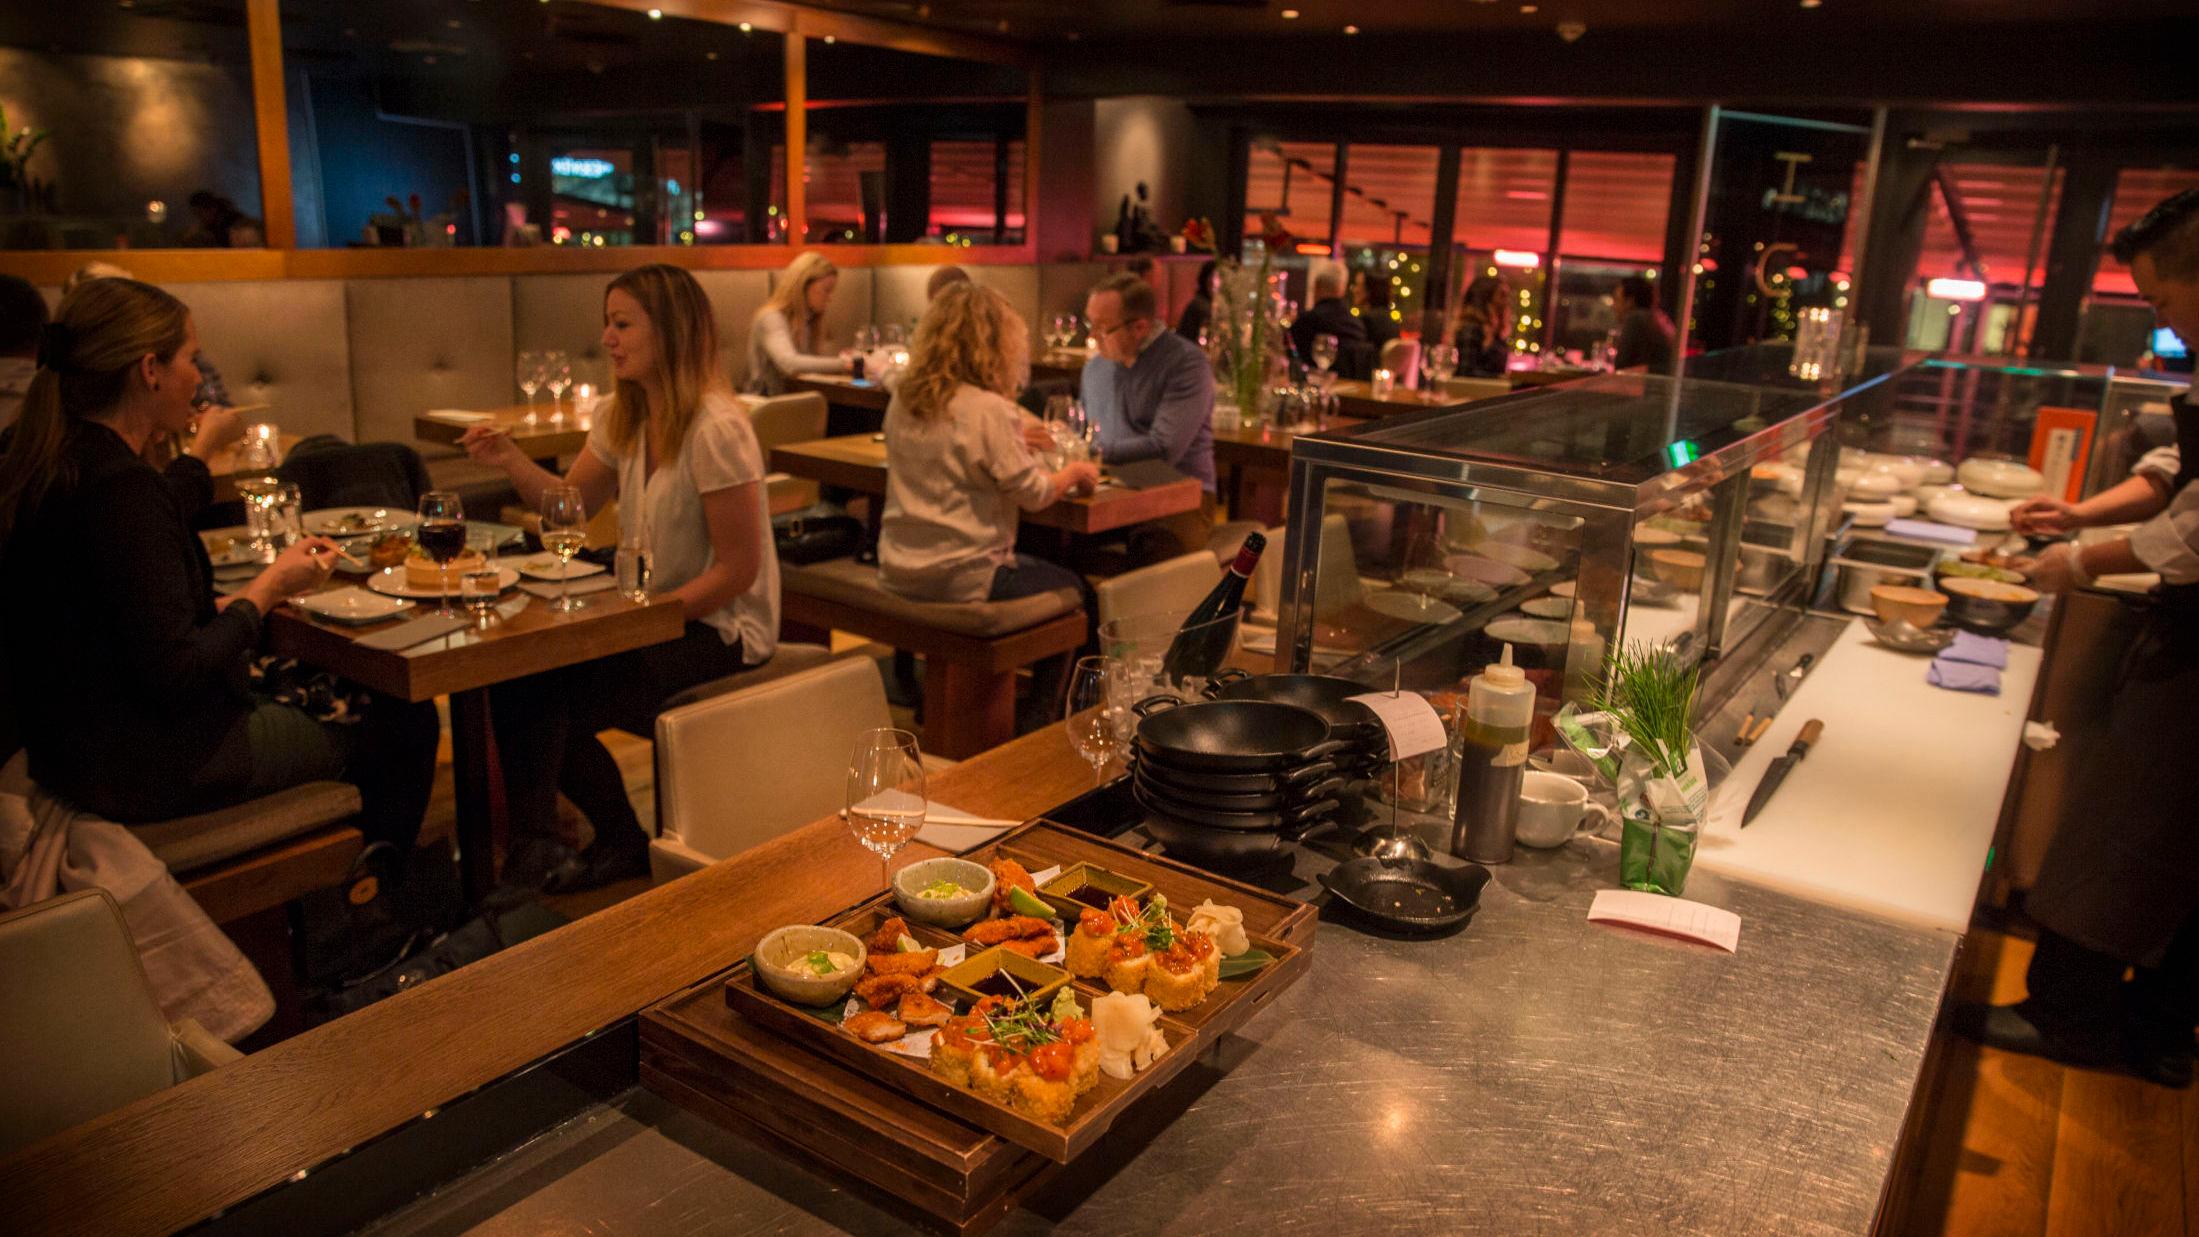 LOCATION LOCATION?: Gjemt midt på Aker Brygges Bryggetorg serverer serverer Huy sushi, asiatiske tapas og nudler. Foto: Mattis Sandblad/VG.